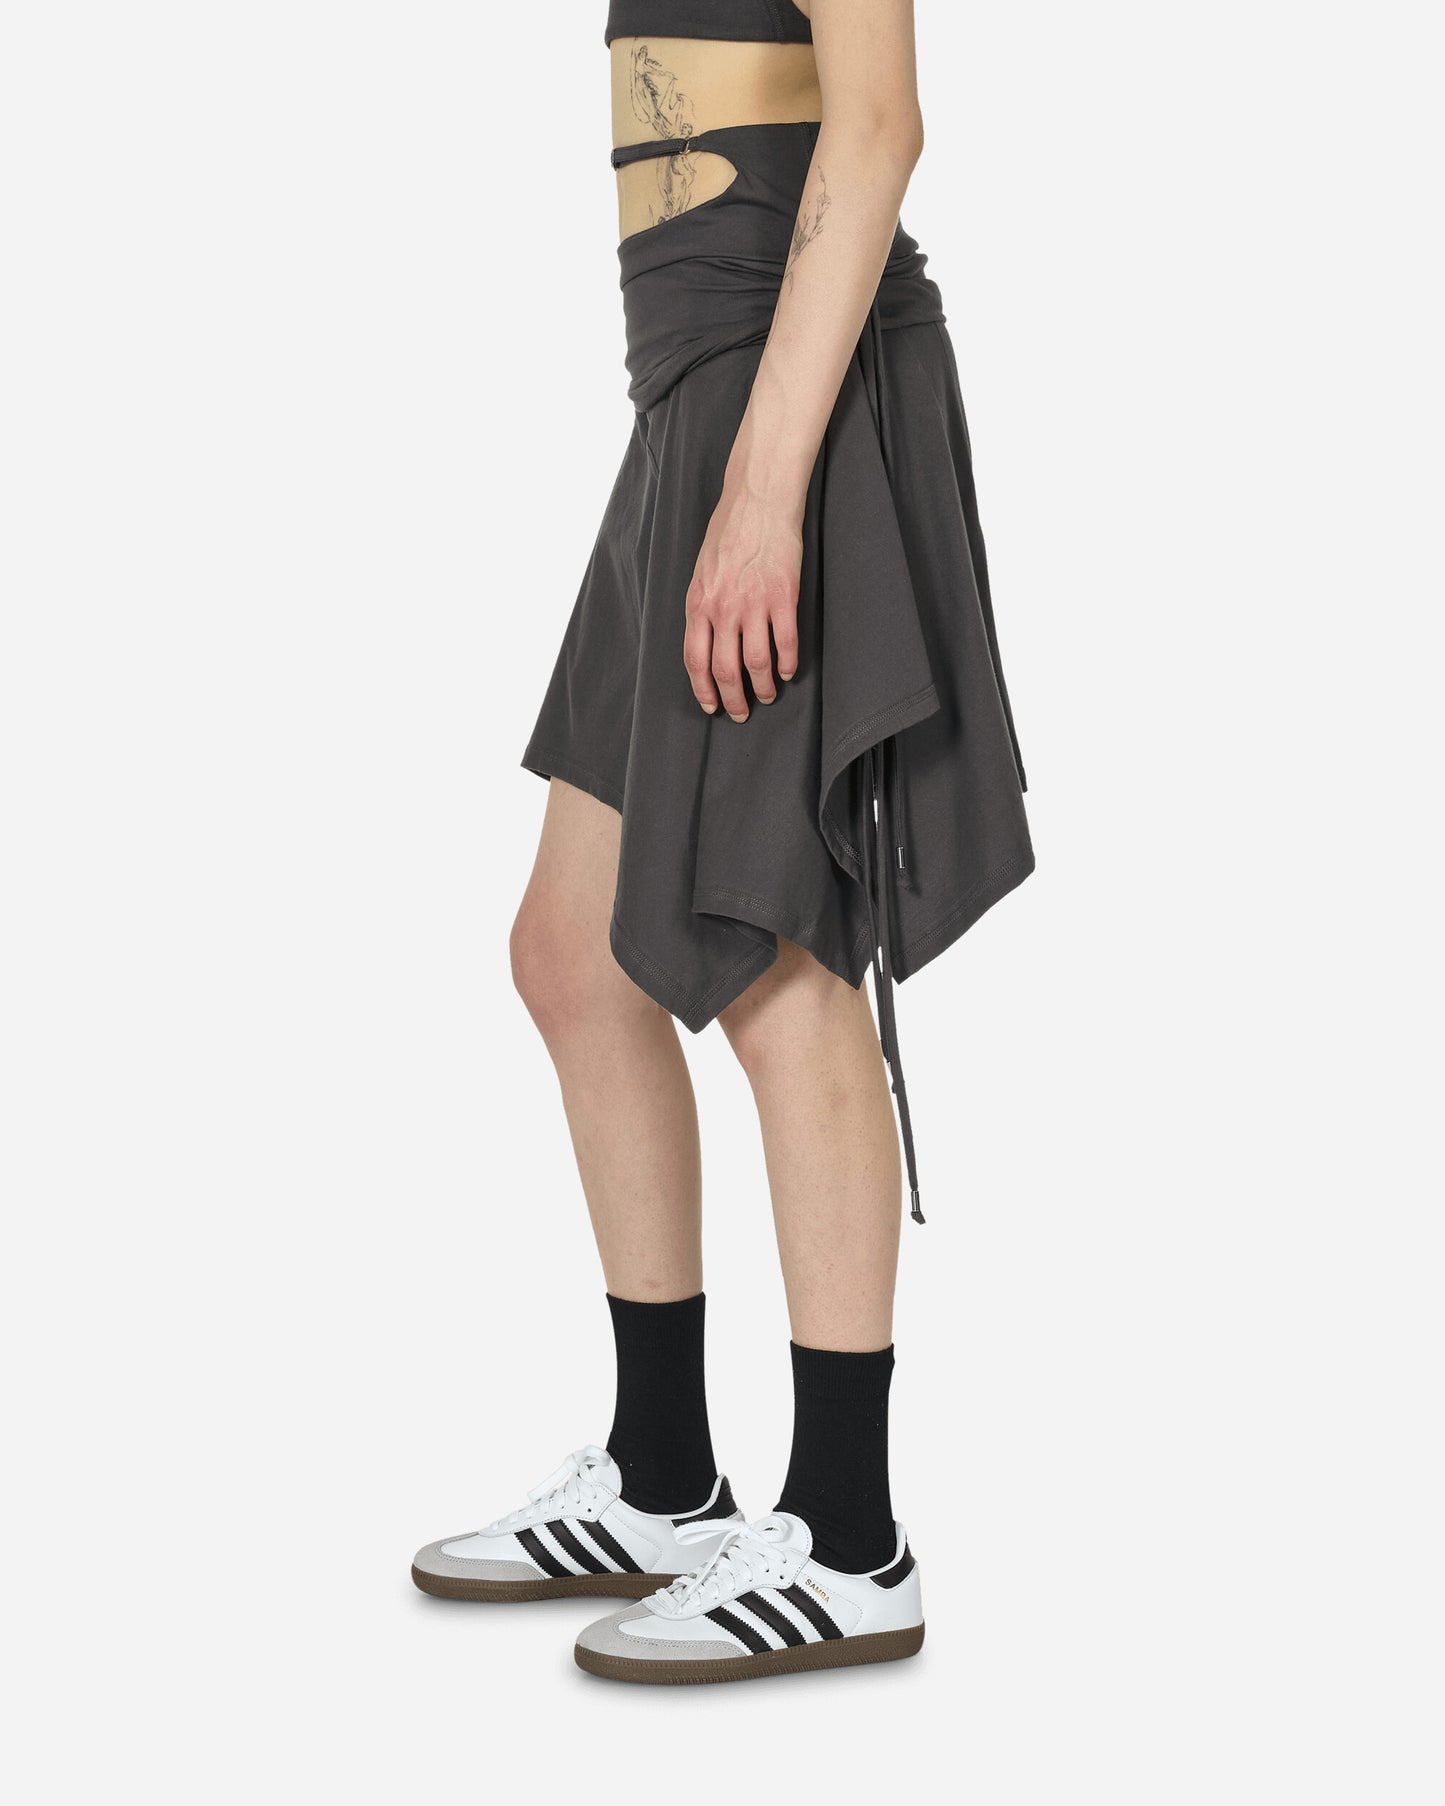 Toile Studios Wmns System Midi Skirt Charcoal Skirts Midi STMMS CHARCOAL